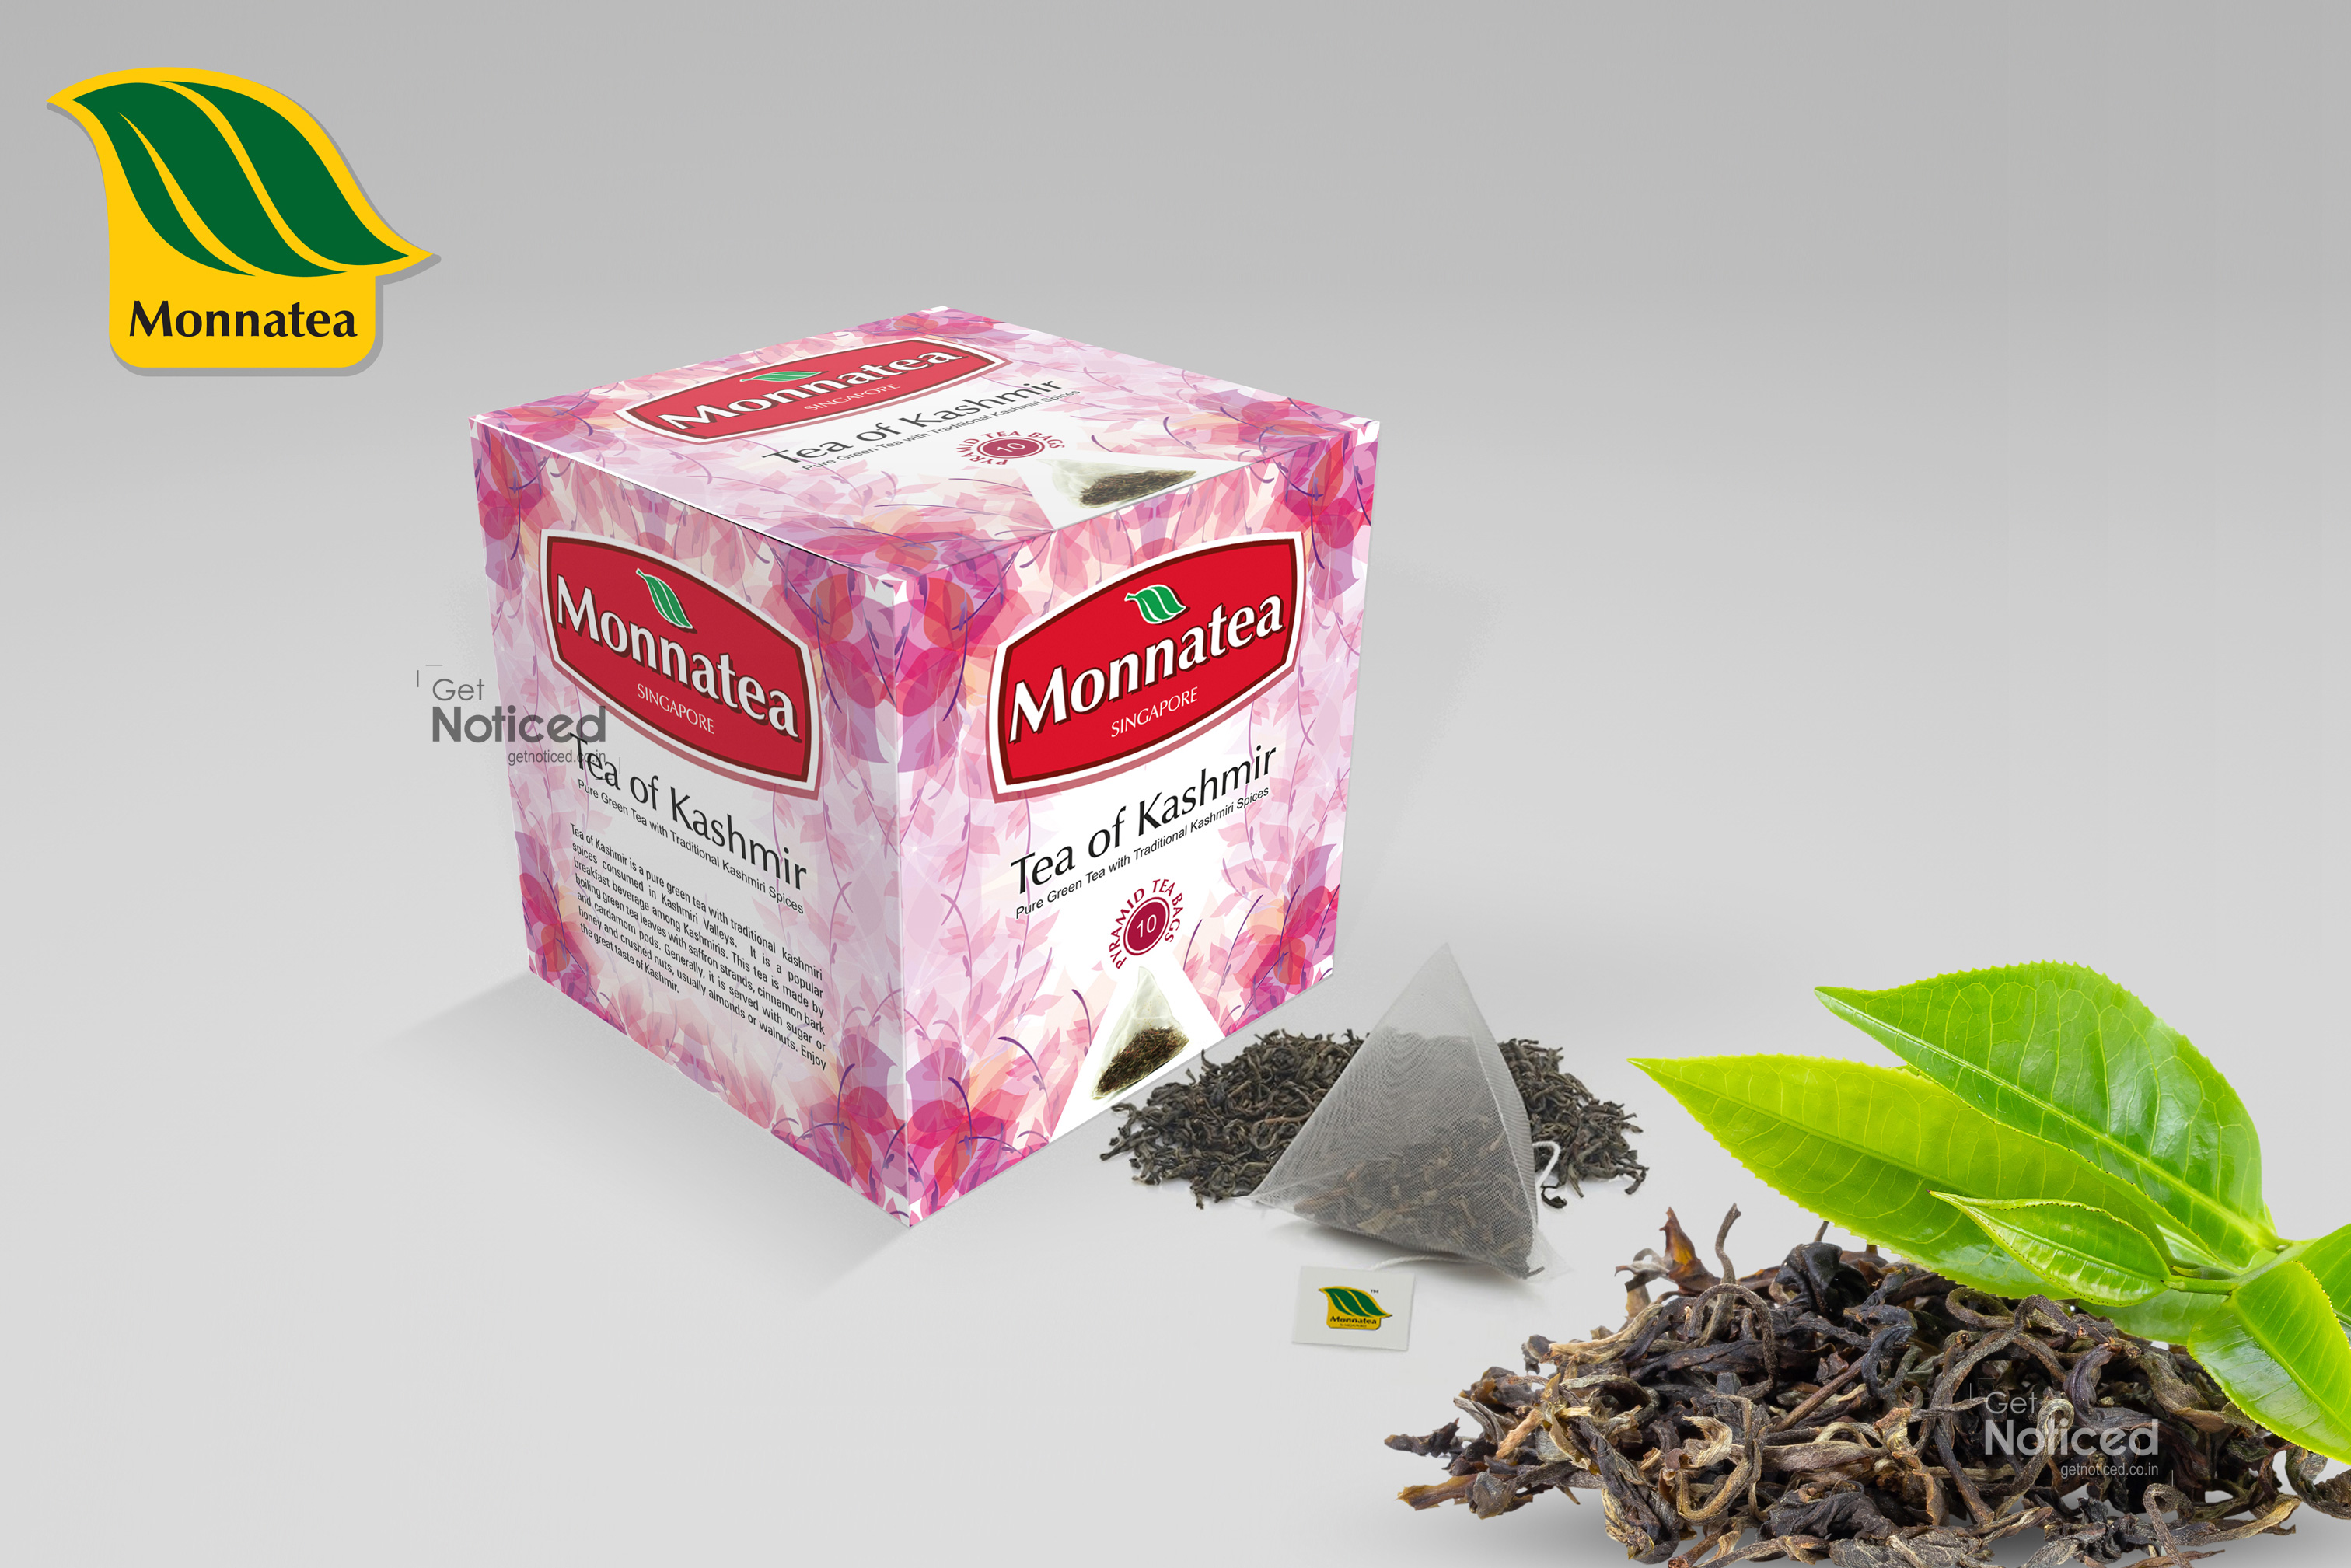 Monnatea Tea Box Packaging Design